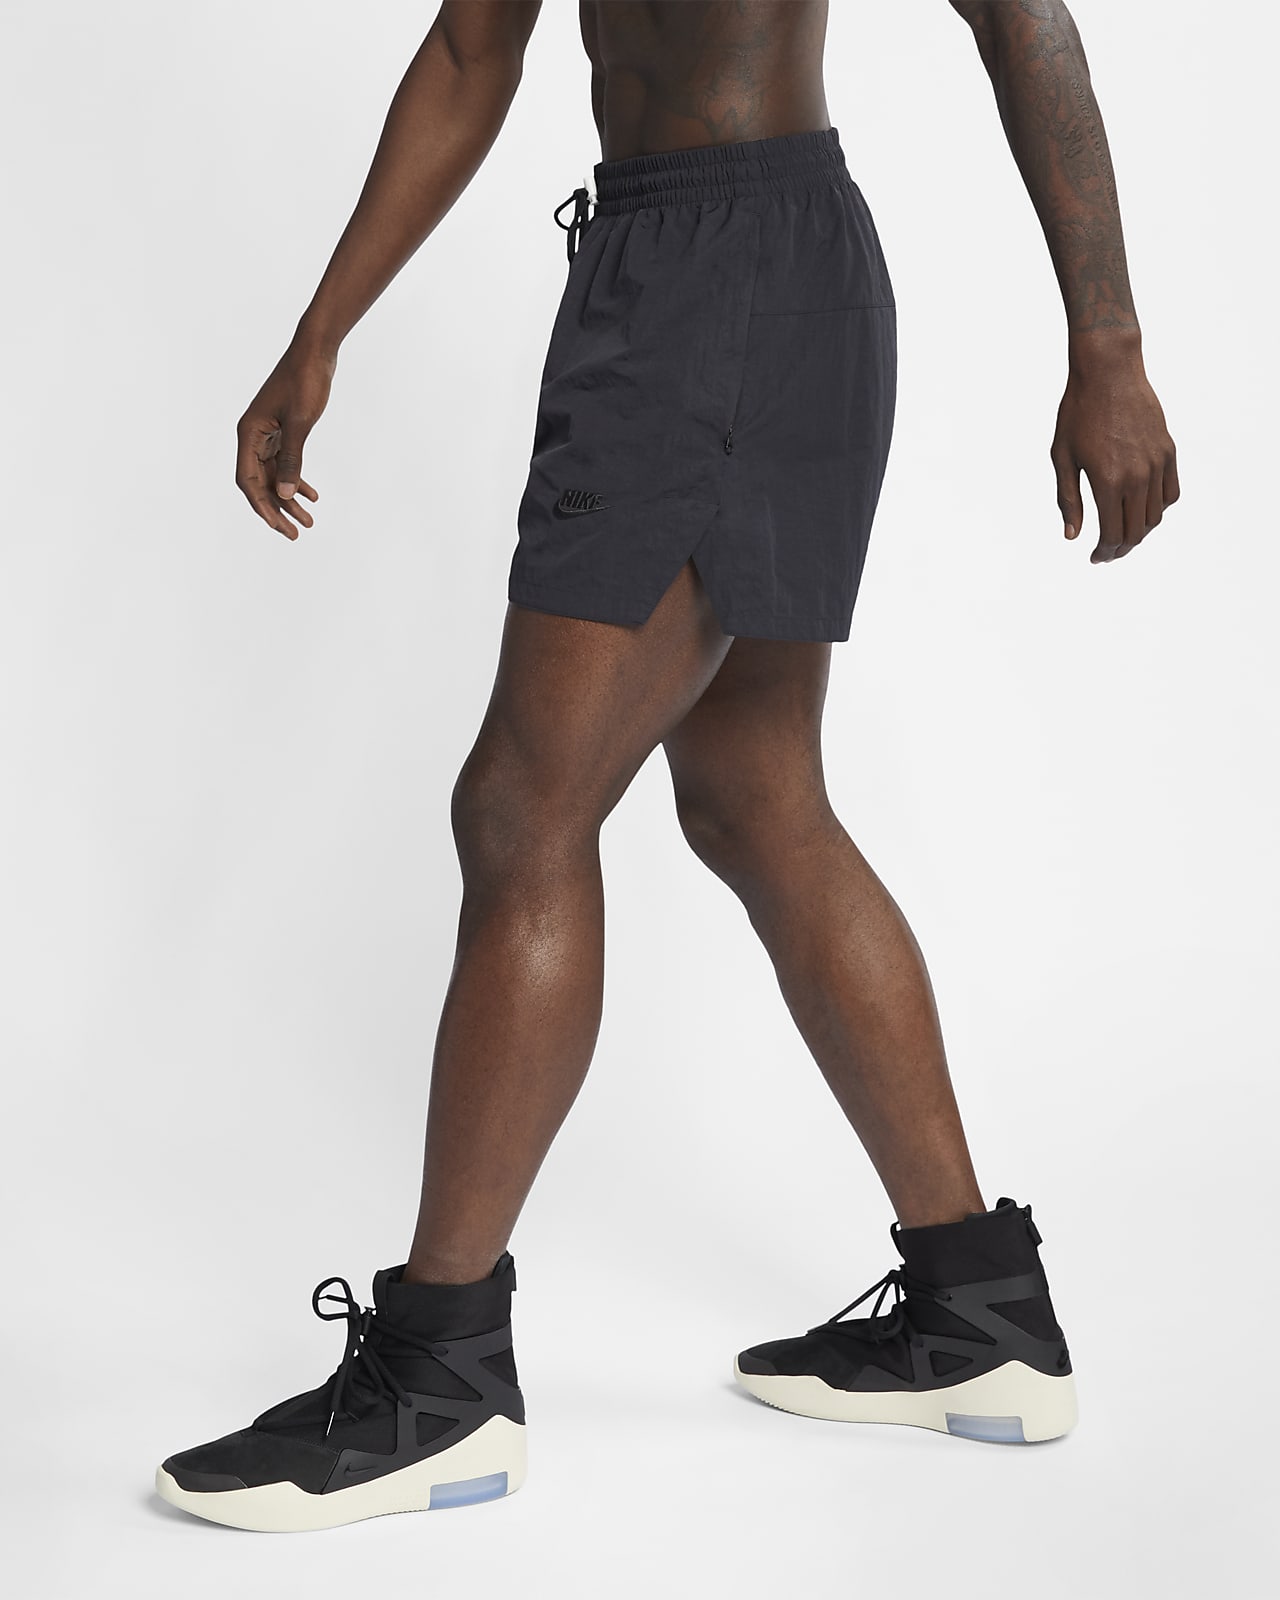 Nike x Fear of God Men's Shorts